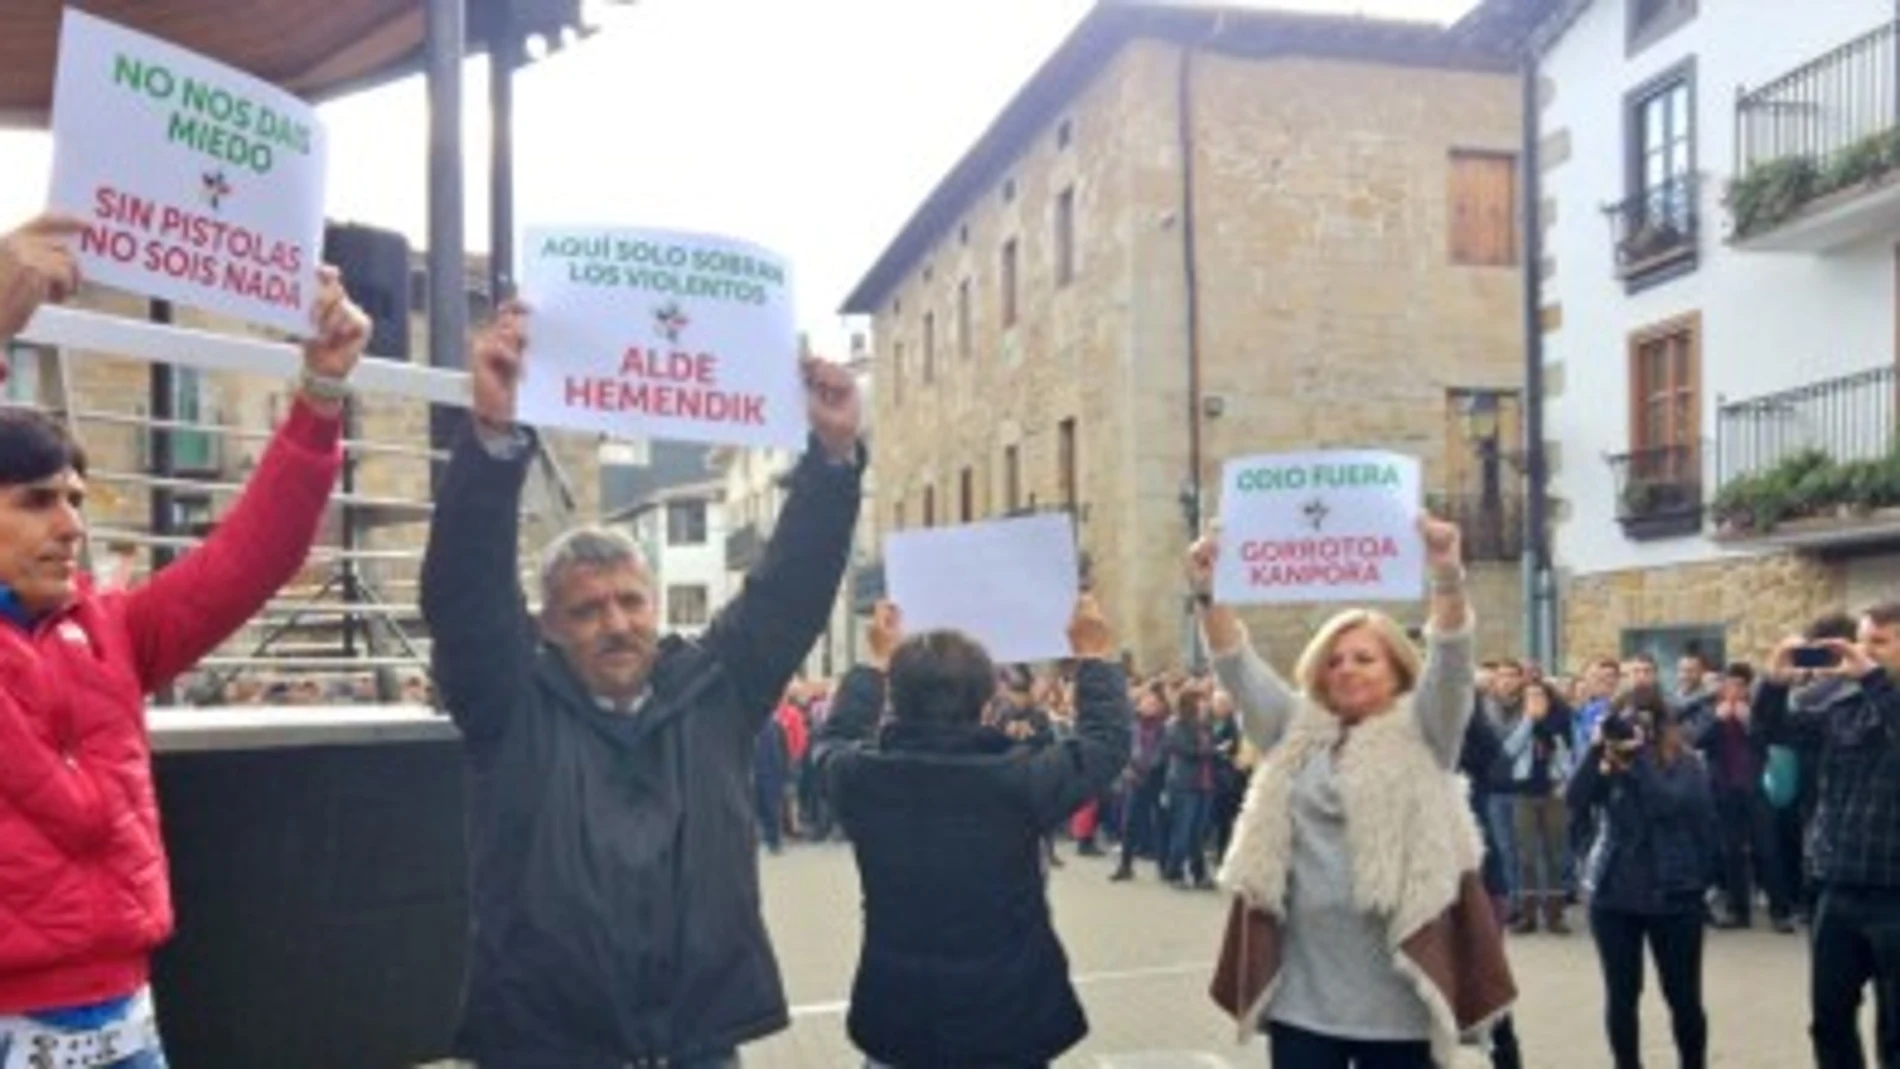 Fernando Altuna con una pancarta frente a la marcha del odio de Alsasua